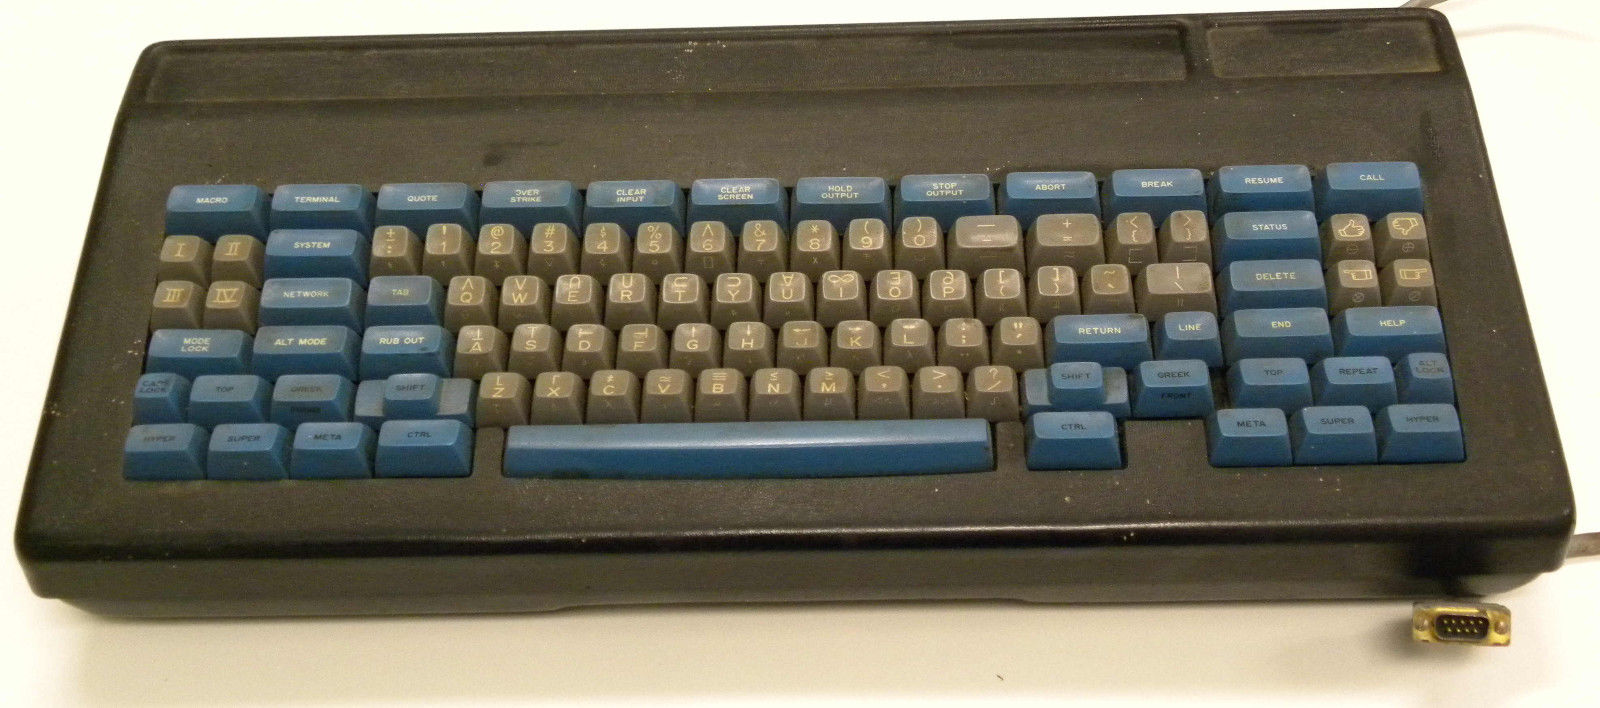 lmi-cadr keyboard 1st gen space cadget 368fc